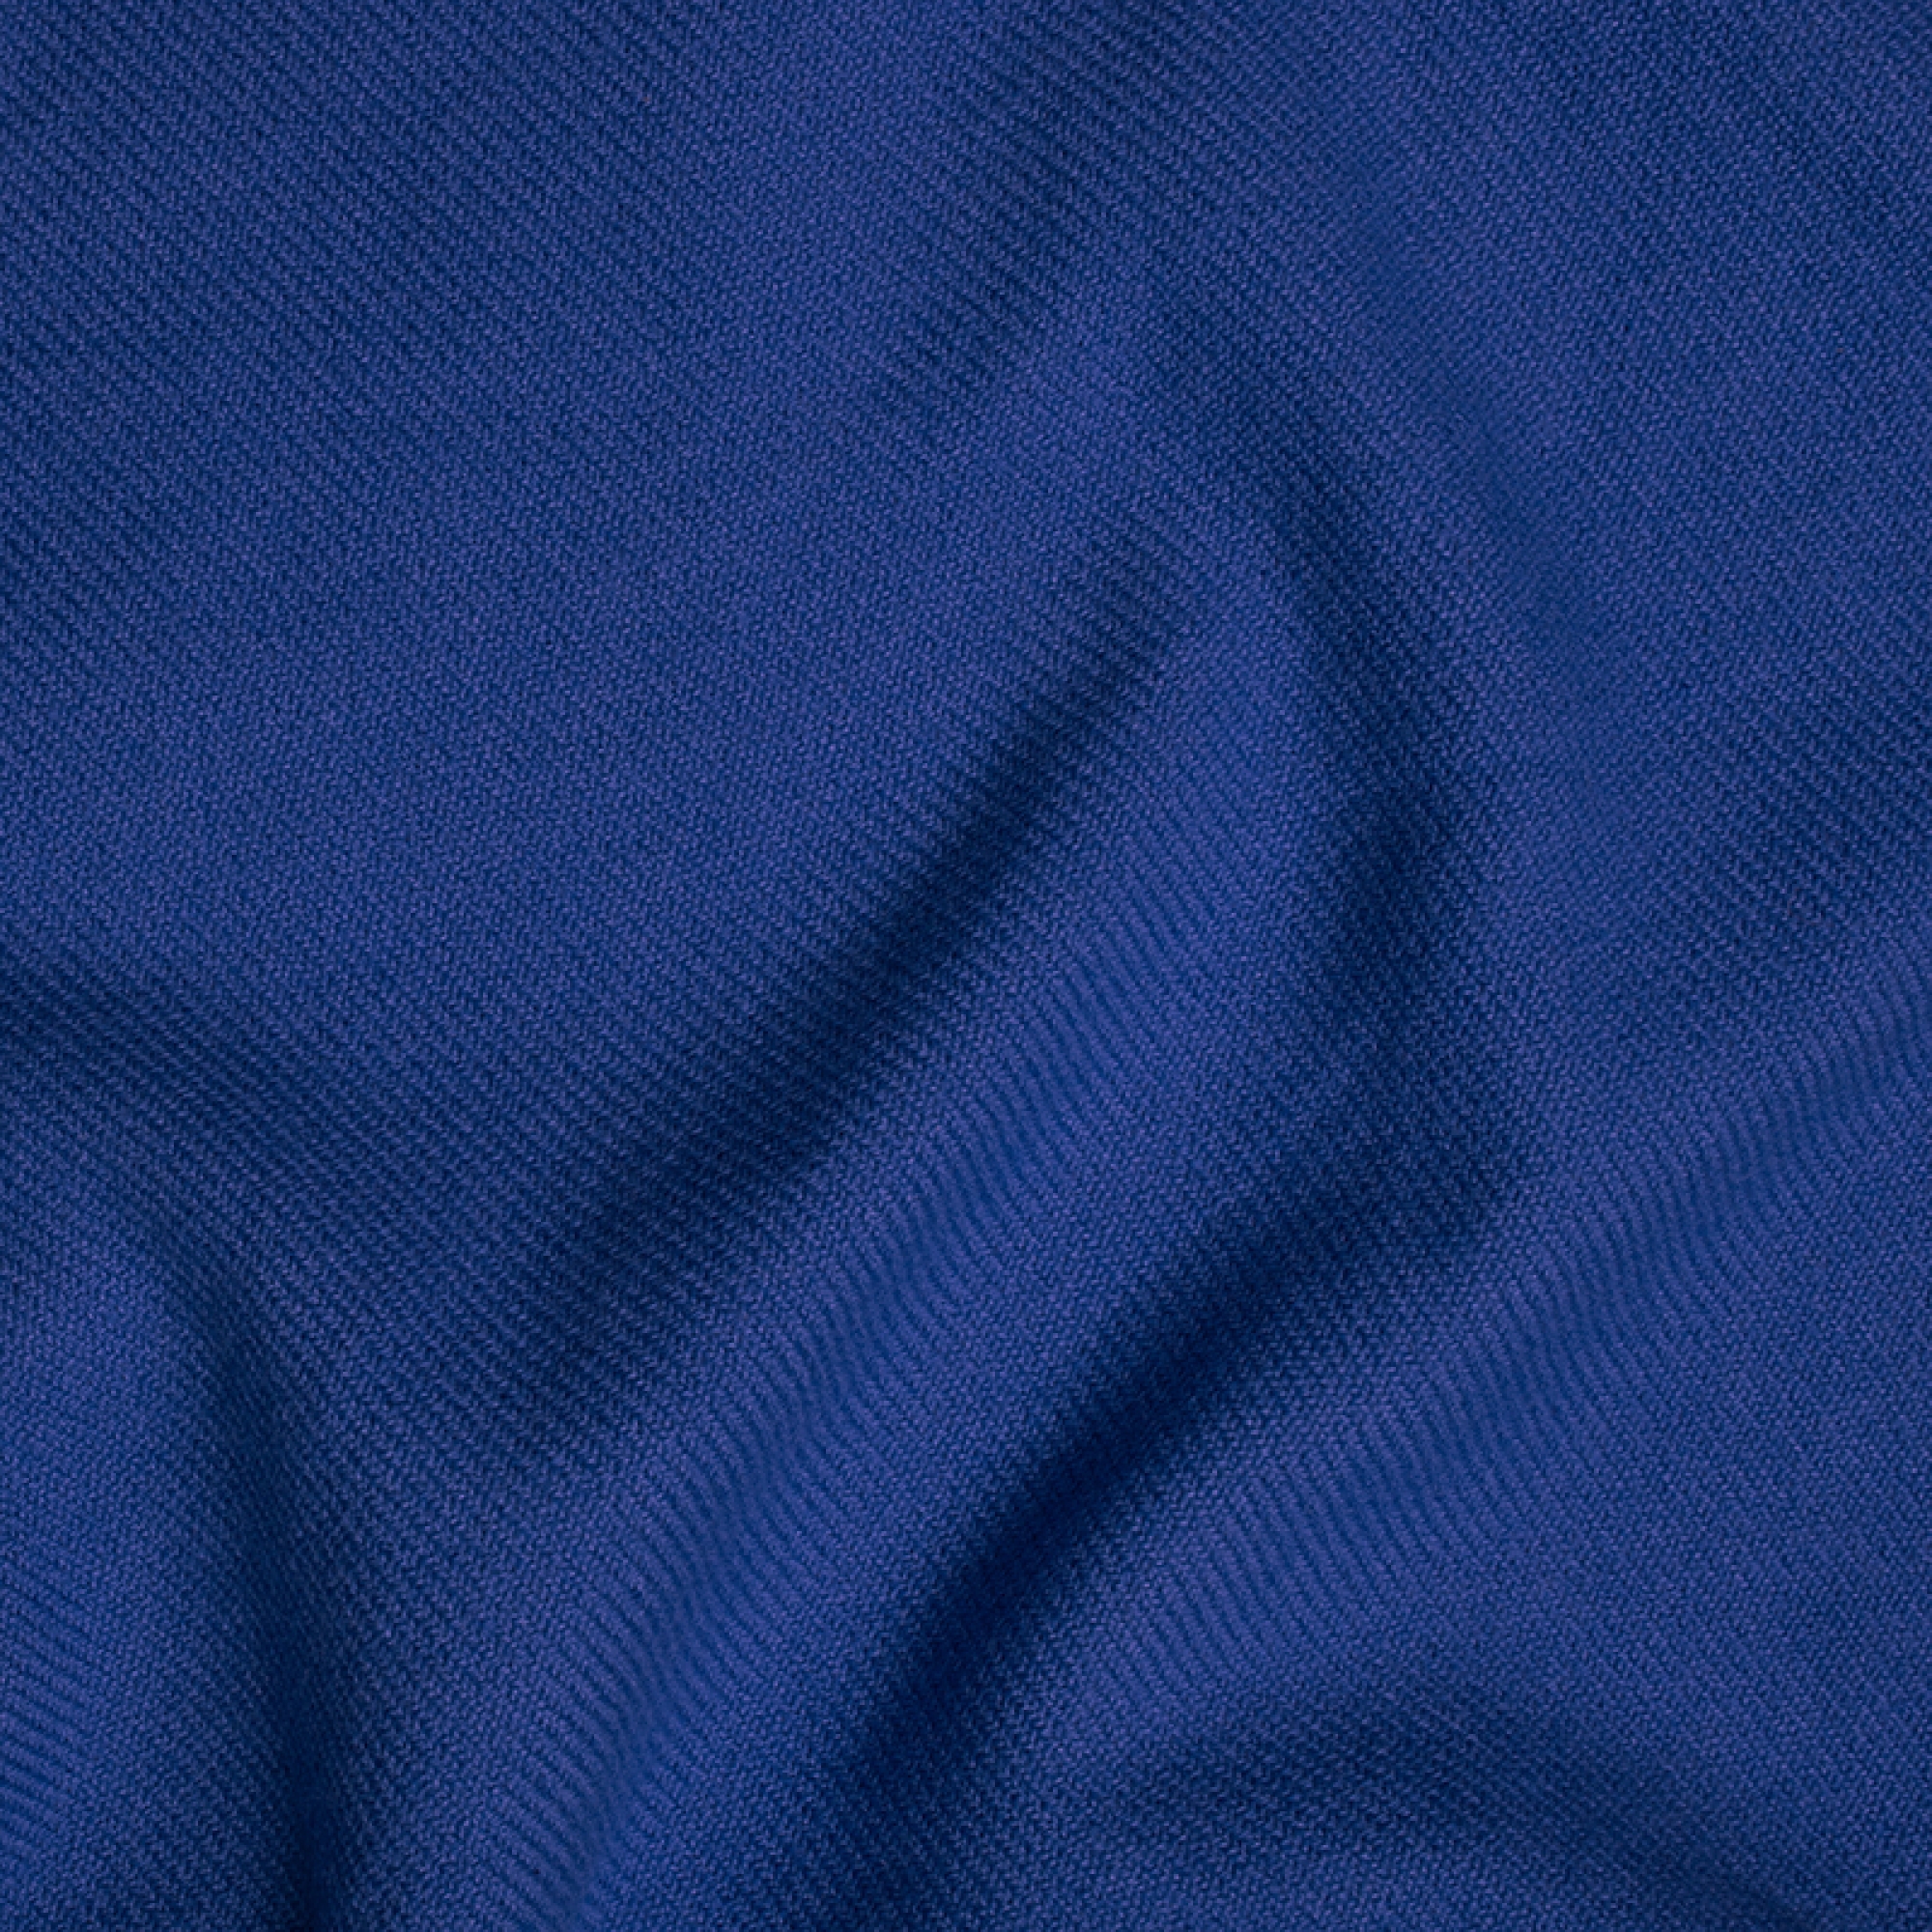 Cachemire pull homme toodoo plain s 140 x 200 bleuet 140 x 200 cm